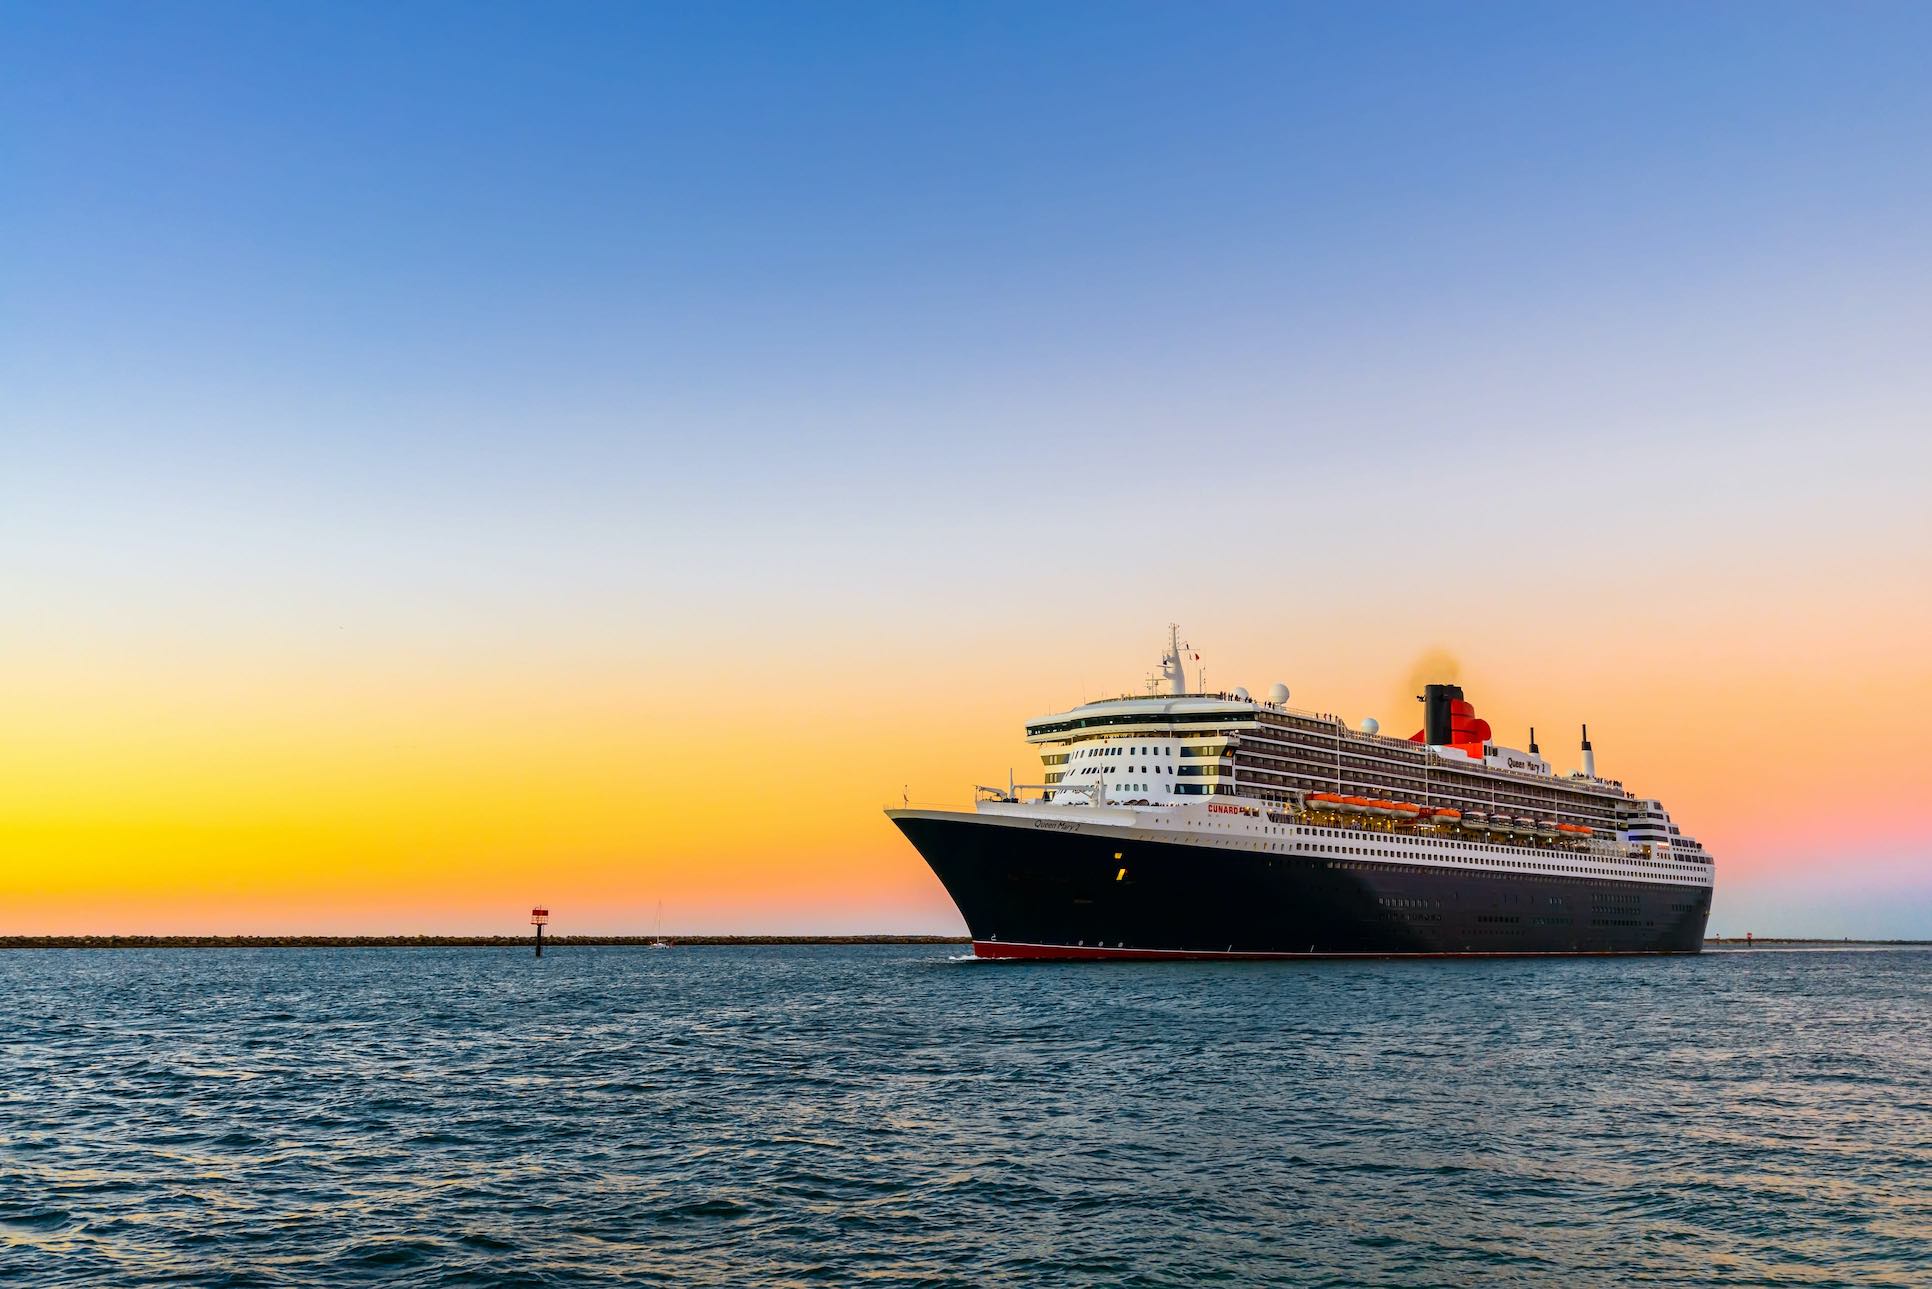 2023 will see two centennial Cunard world cruises